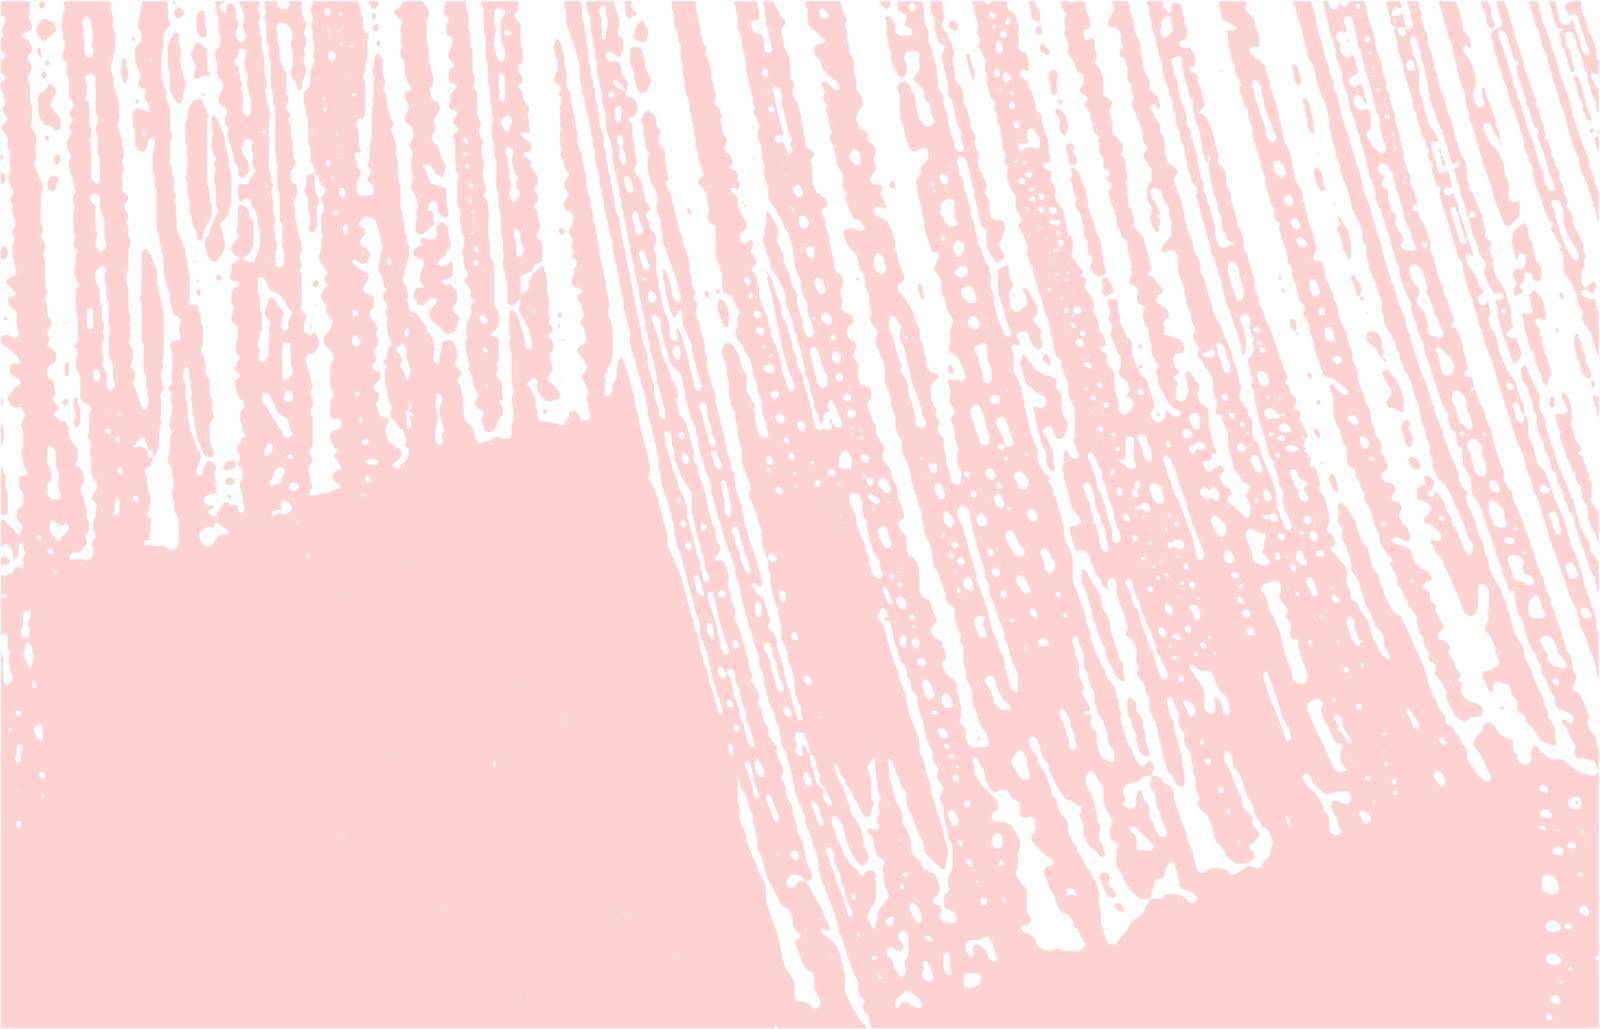 Grunge texture. Distress pink rough trace. Gracefu by beginagain